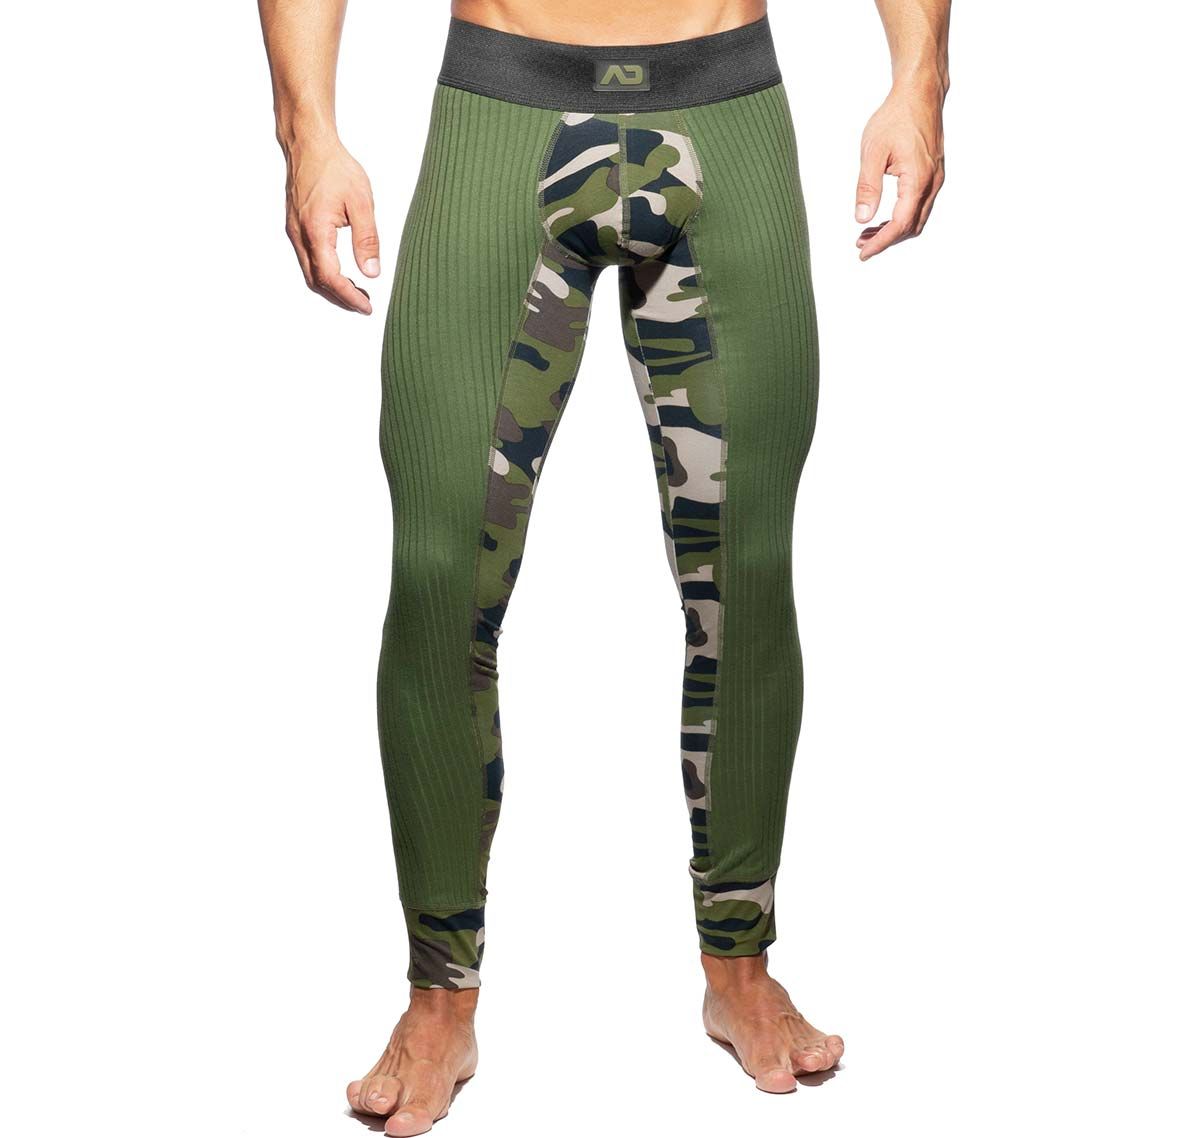 Addicted long underpants CAMO RIB LONG JOHN AD781, camouflage